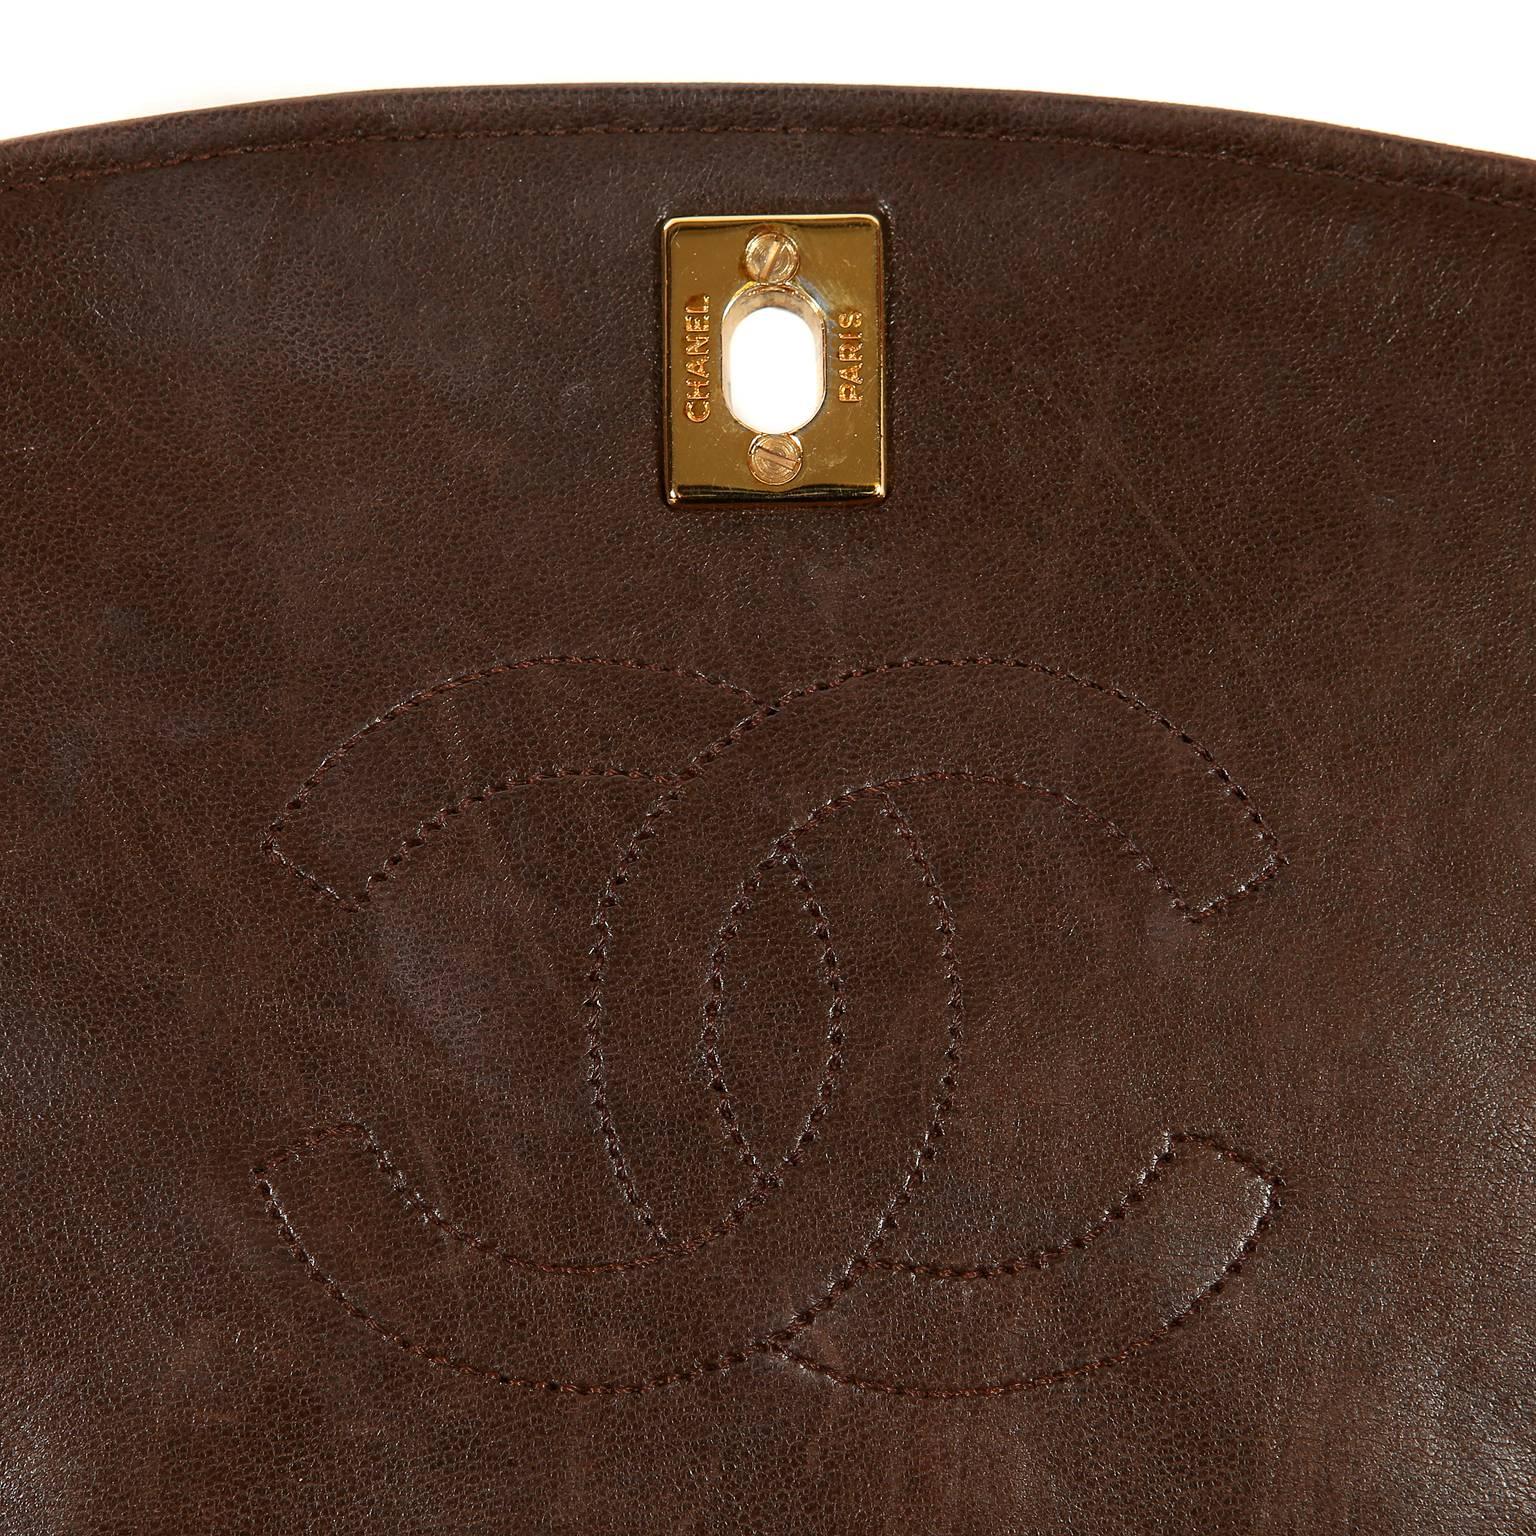 Chanel Brown Leather Vintage Medium Flap Bag 3